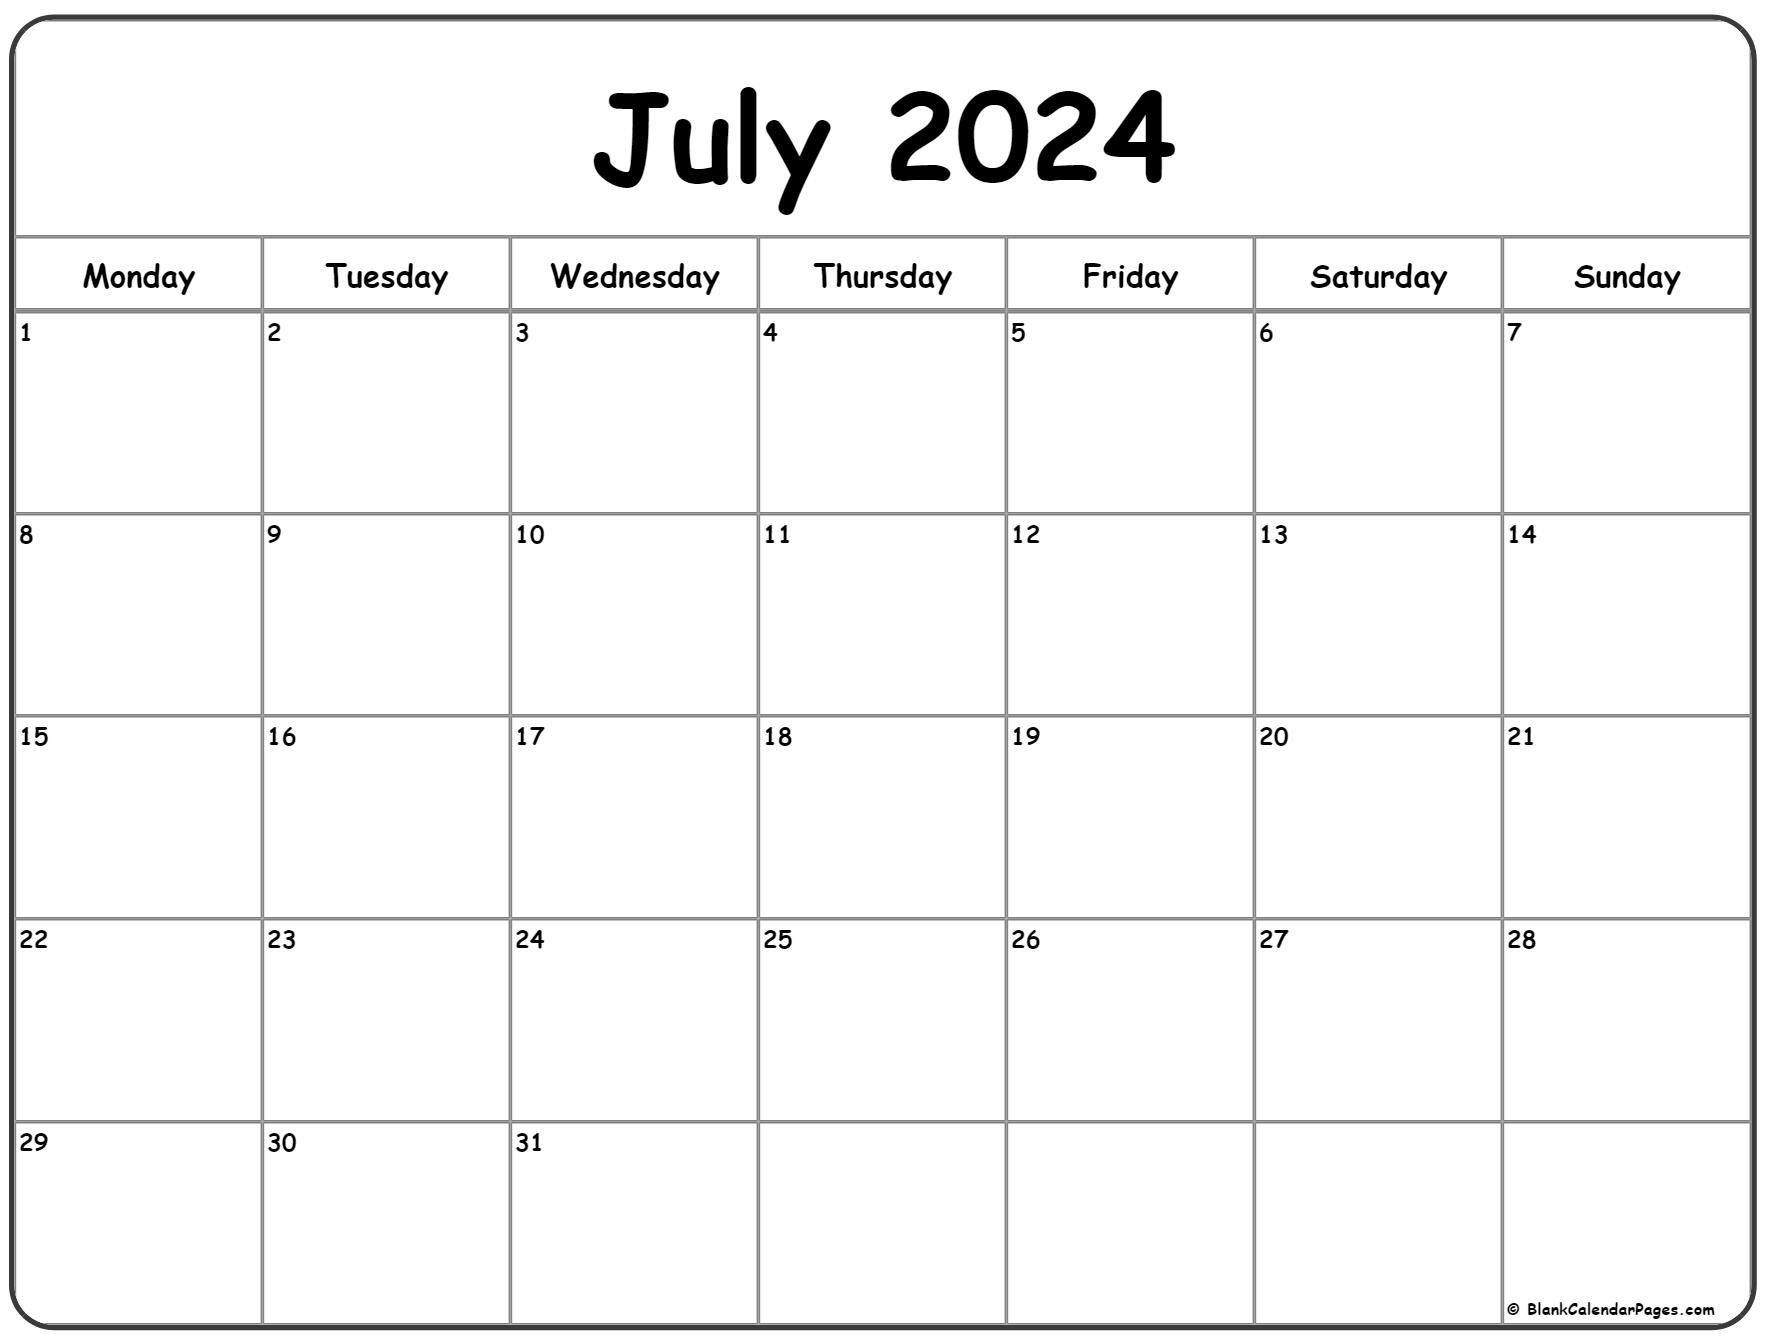 July 2022 Schedule July 2022 Monday Calendar | Monday To Sunday